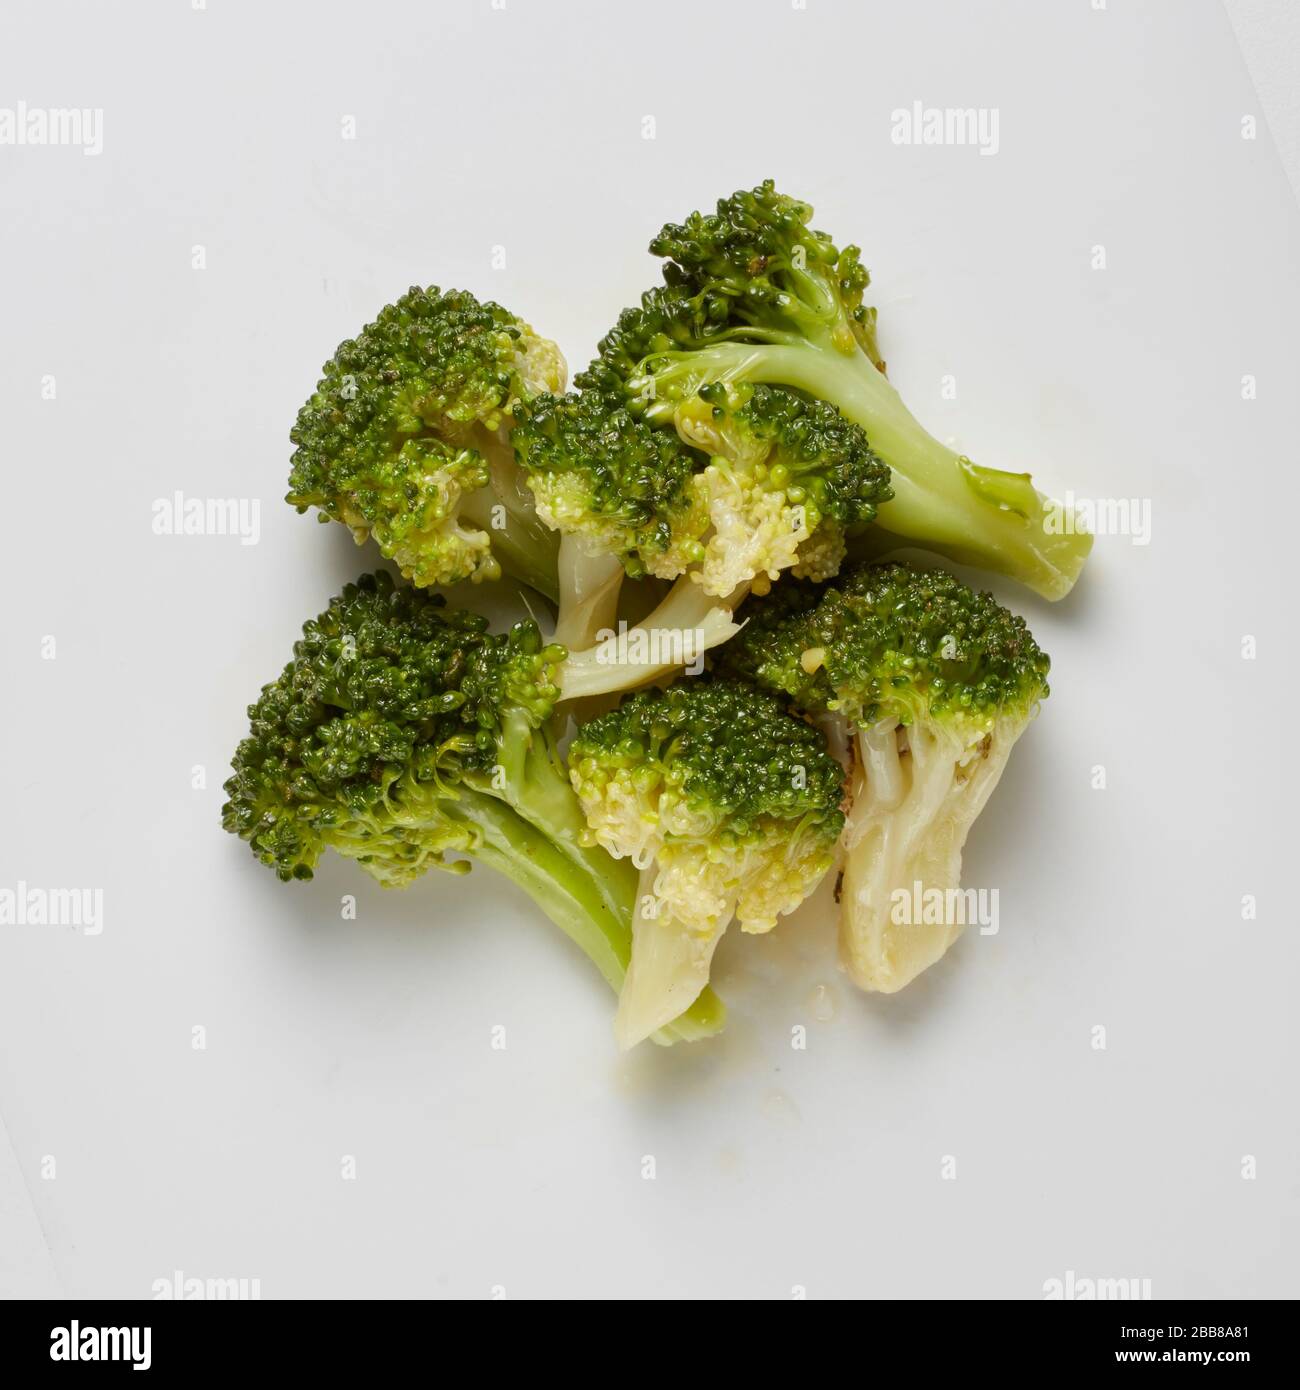 broccoli green vegetable vegan vegetarian portion food prepared sample vegetable round florets eat food Stock Photo